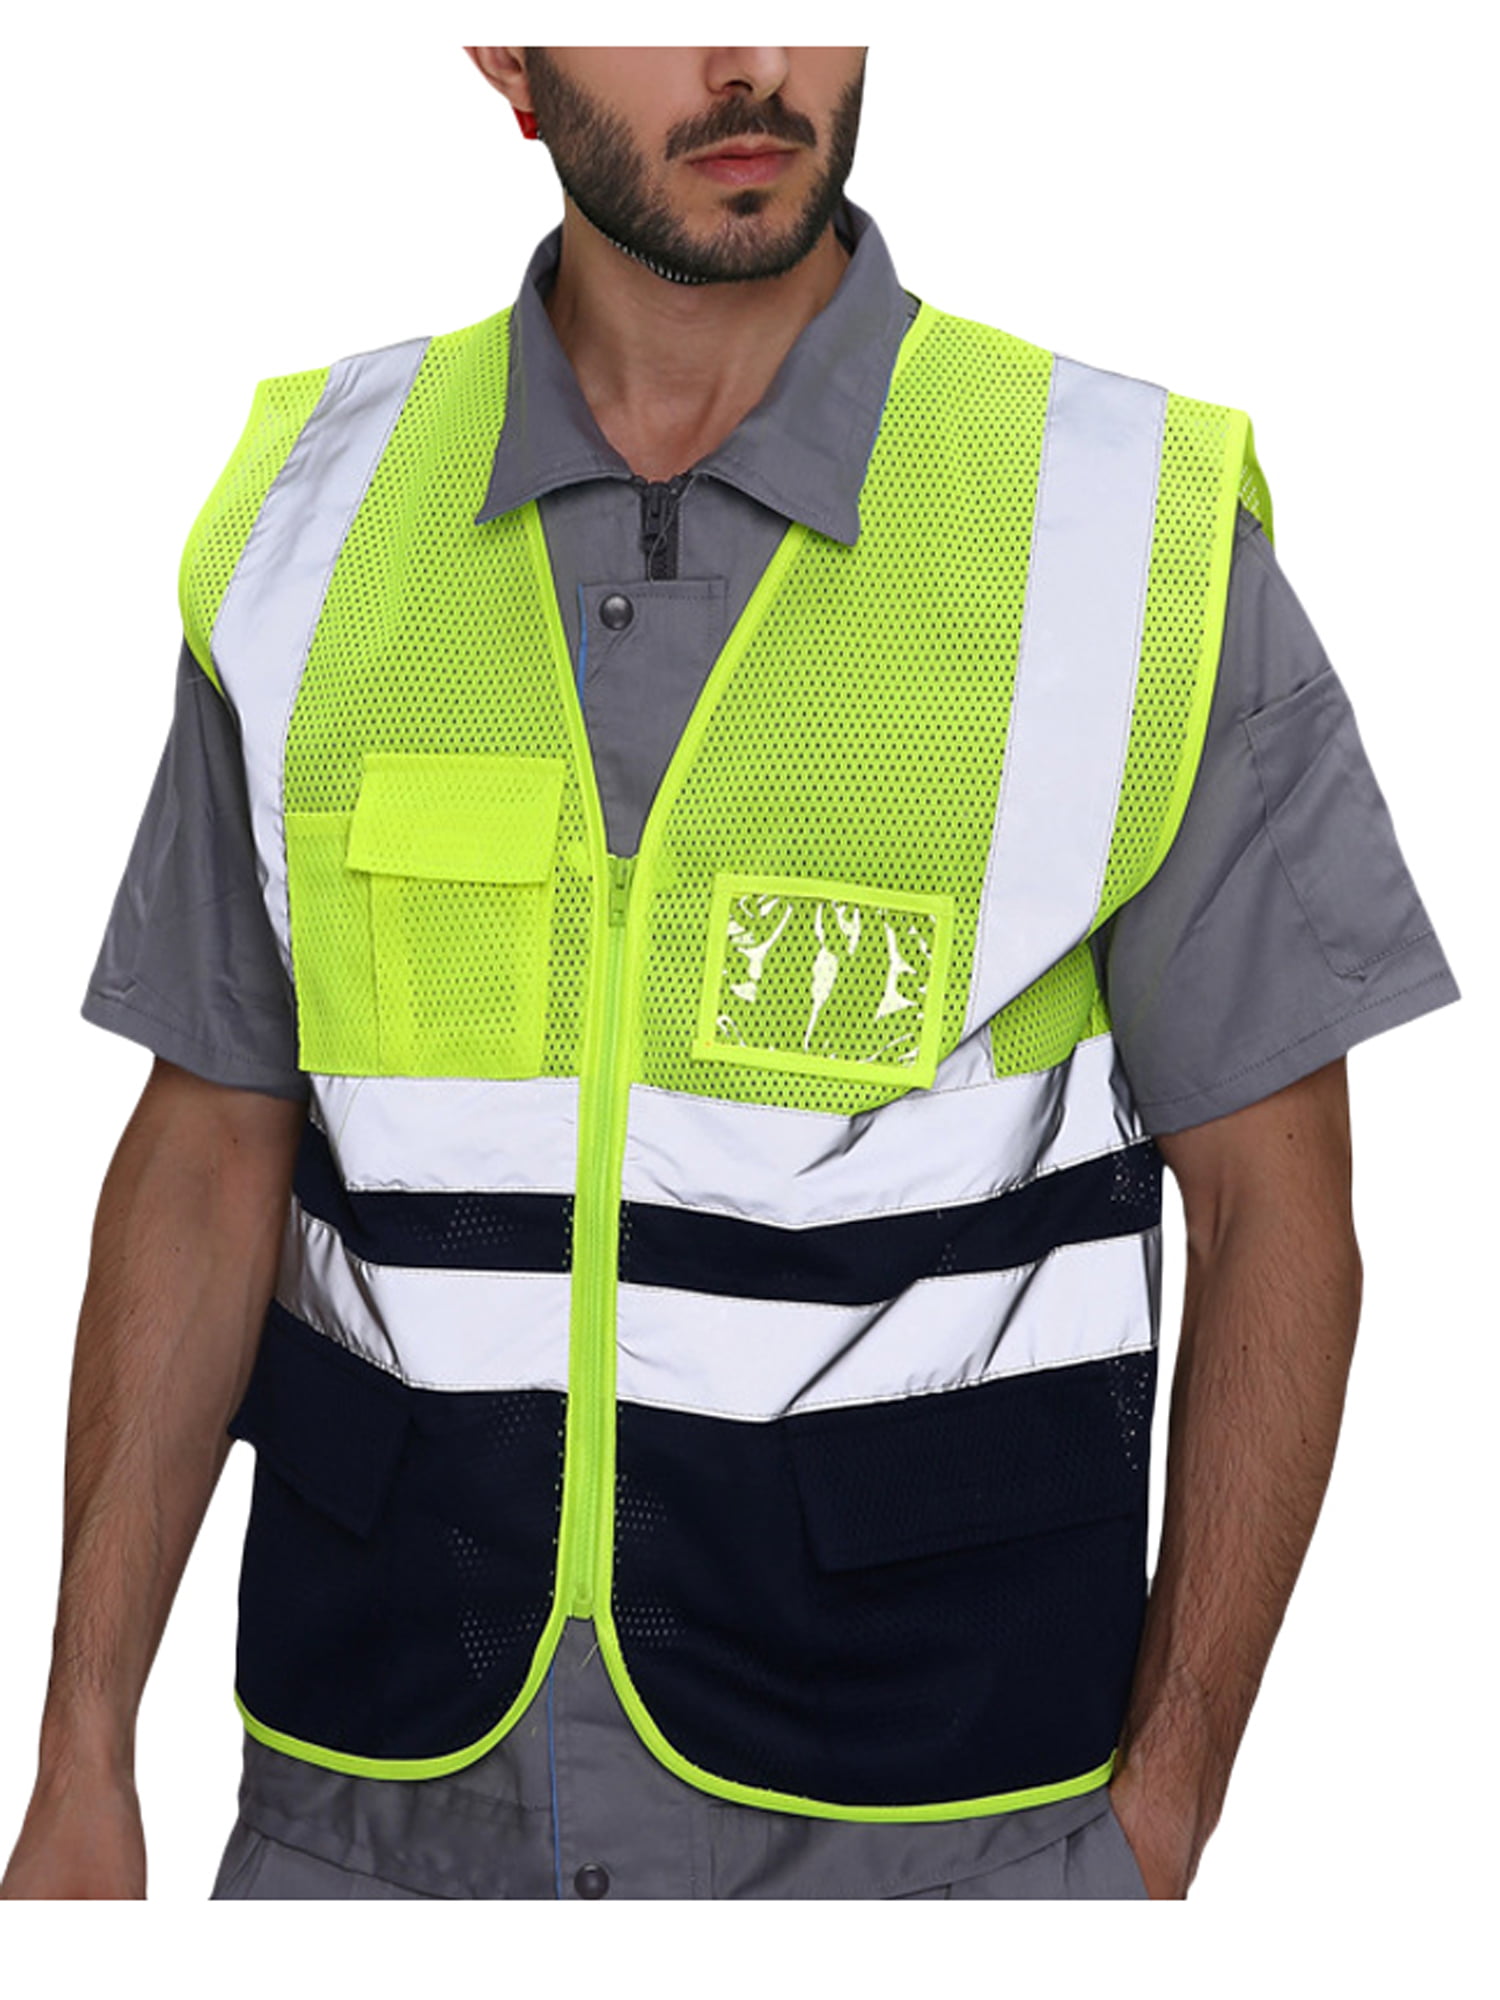 New Hi-Viz High Visibility Yellow Workwear Safety Vest Waistcoat Adult Size 2XL 